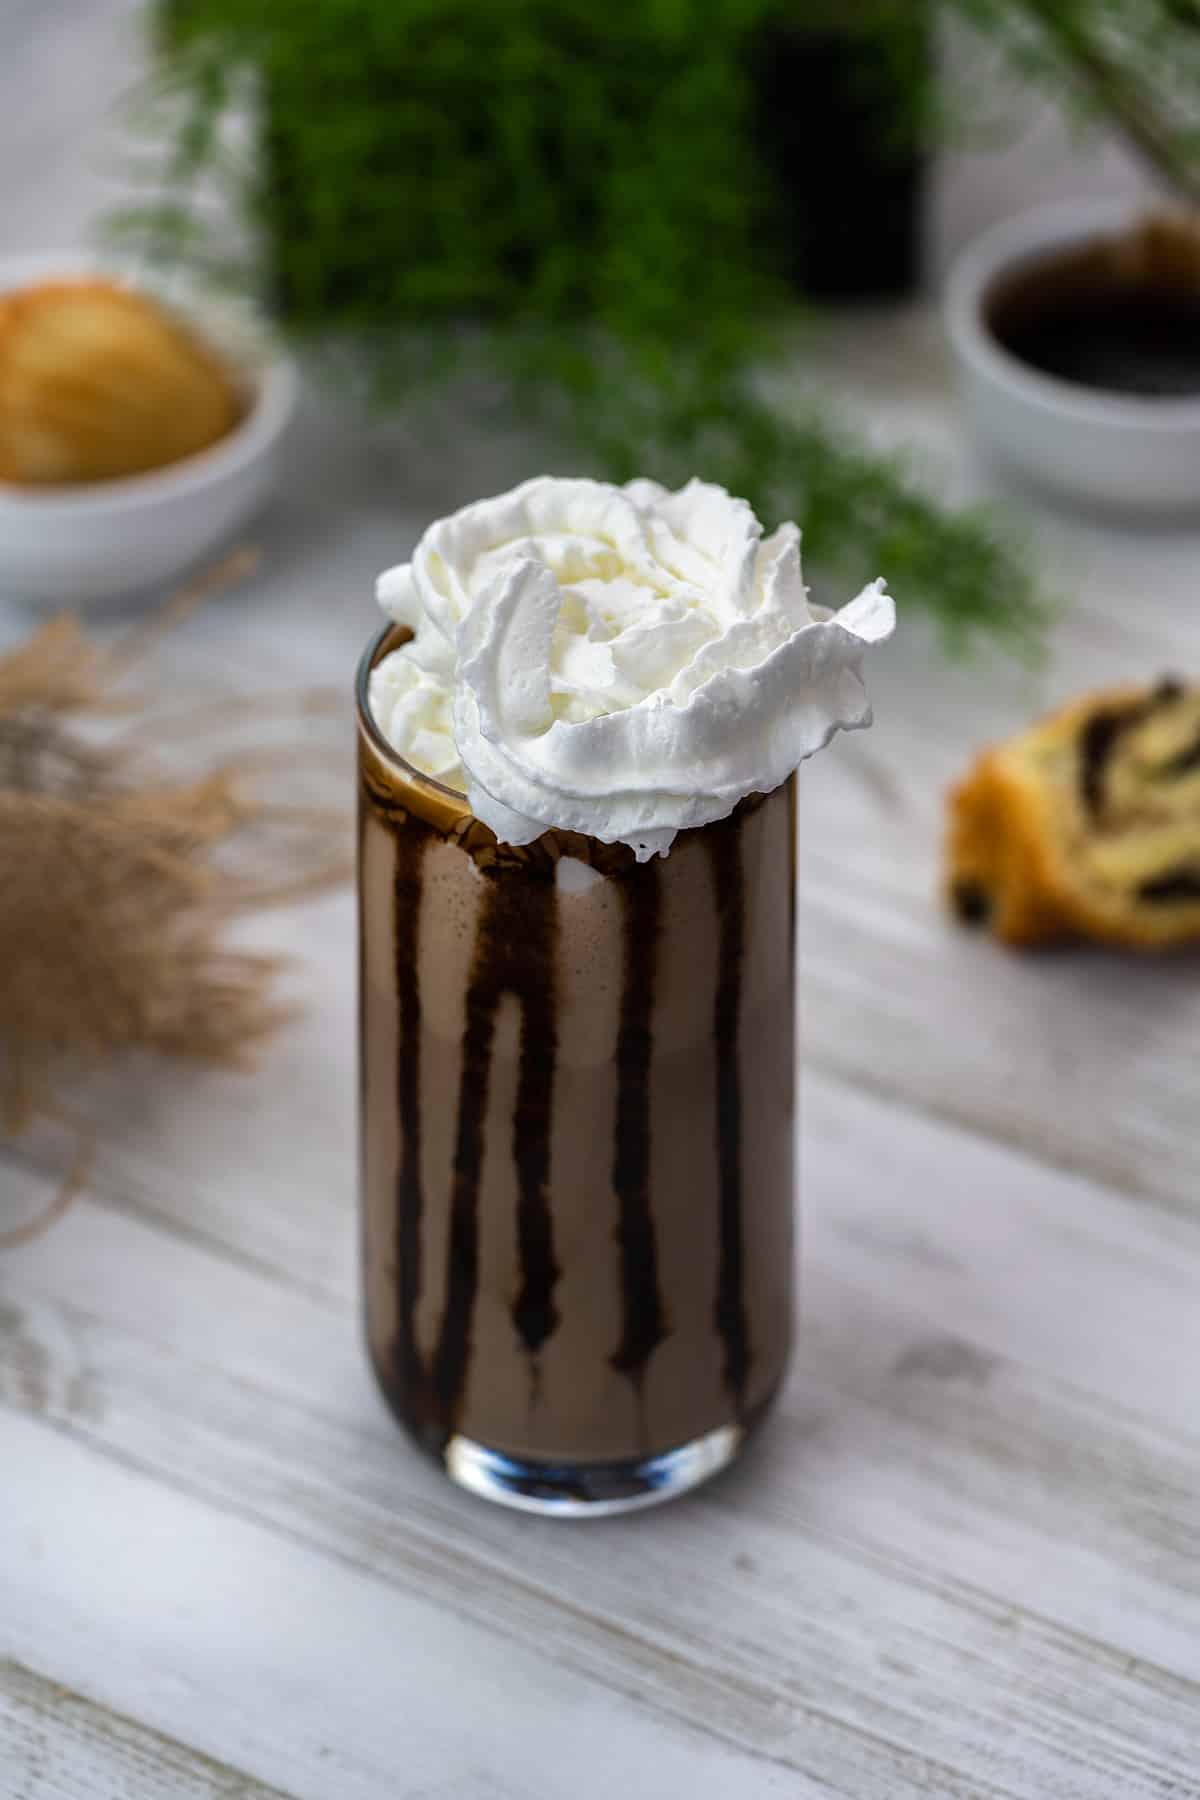 Chocolate Milkshake in a glass